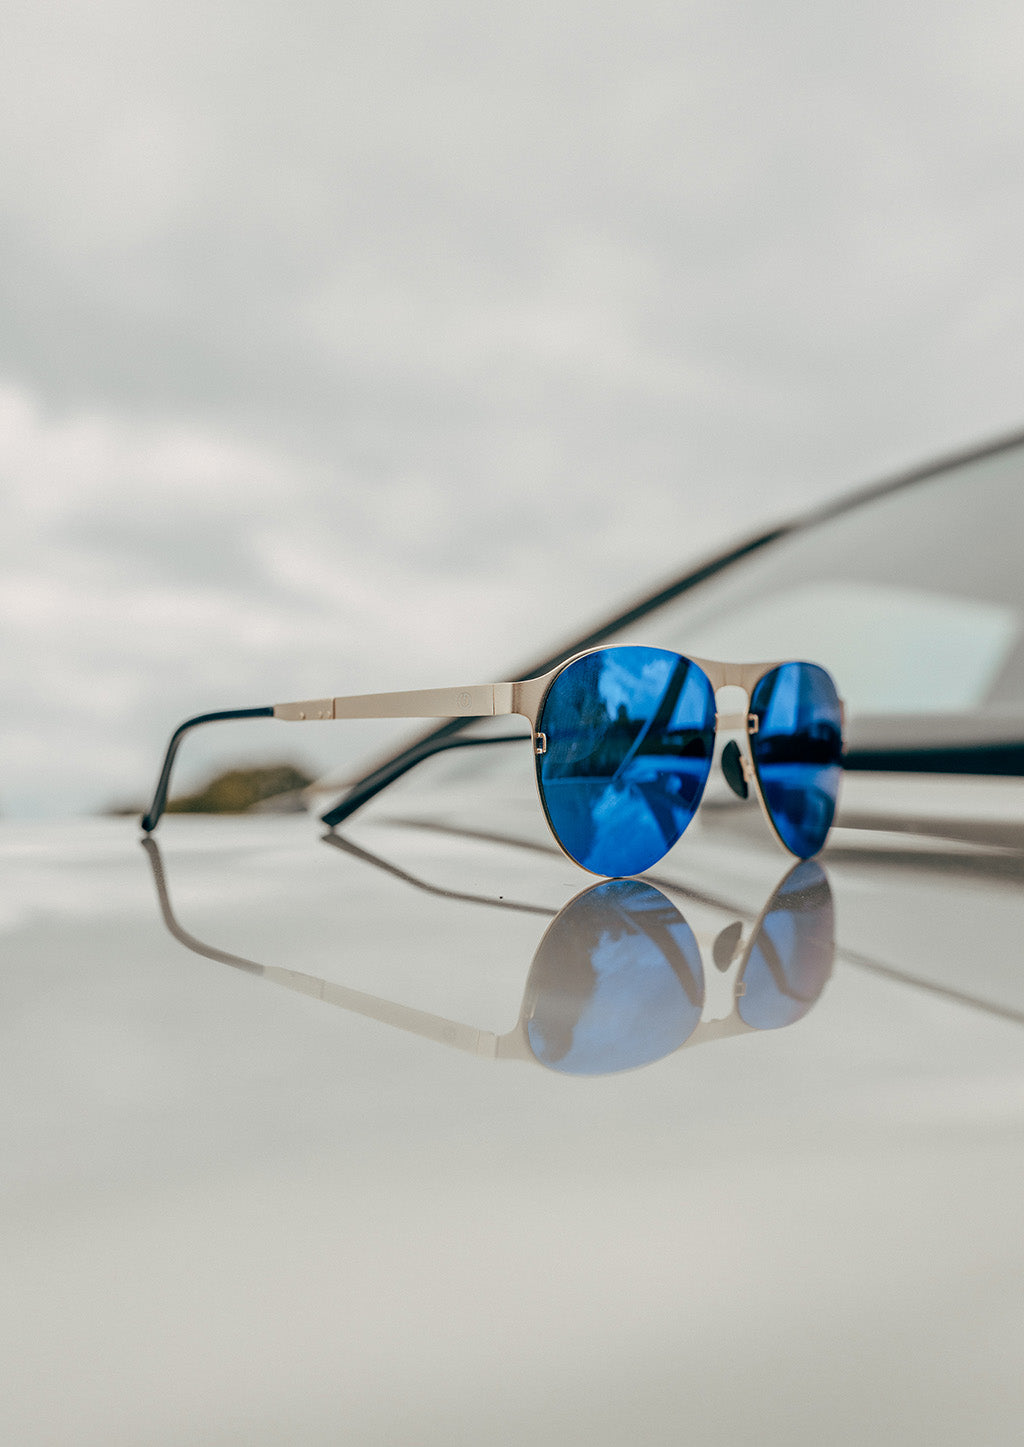 Foldable sunglasses - Scout classic aviator design - Lifestyle photo